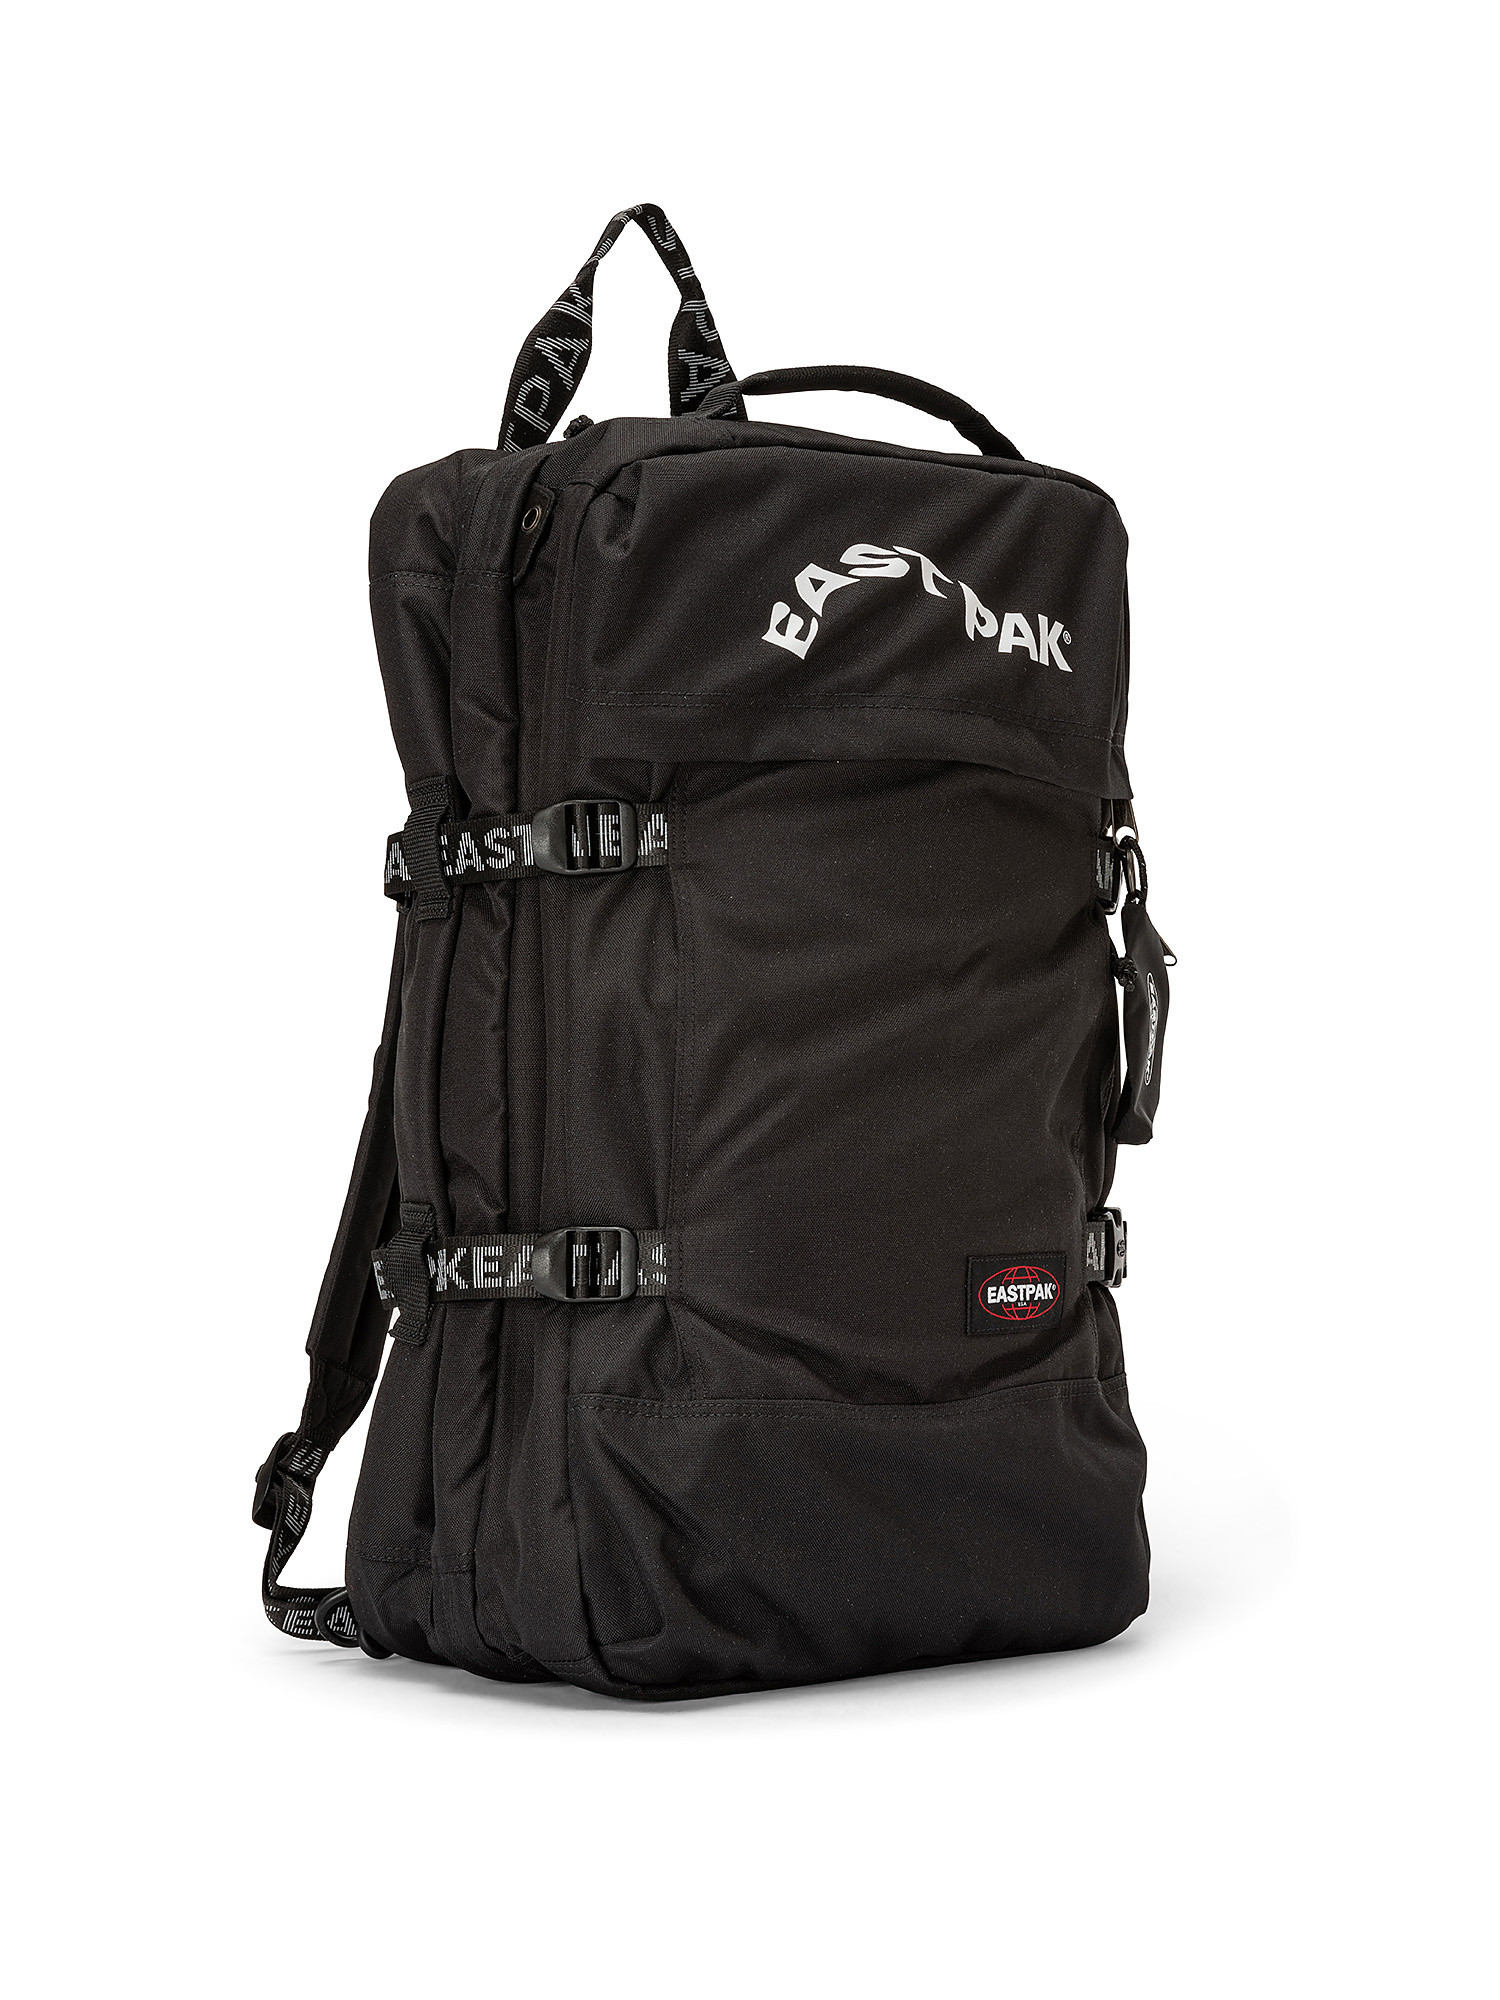 2 in 1 bag with lively logo, Black, large image number 1